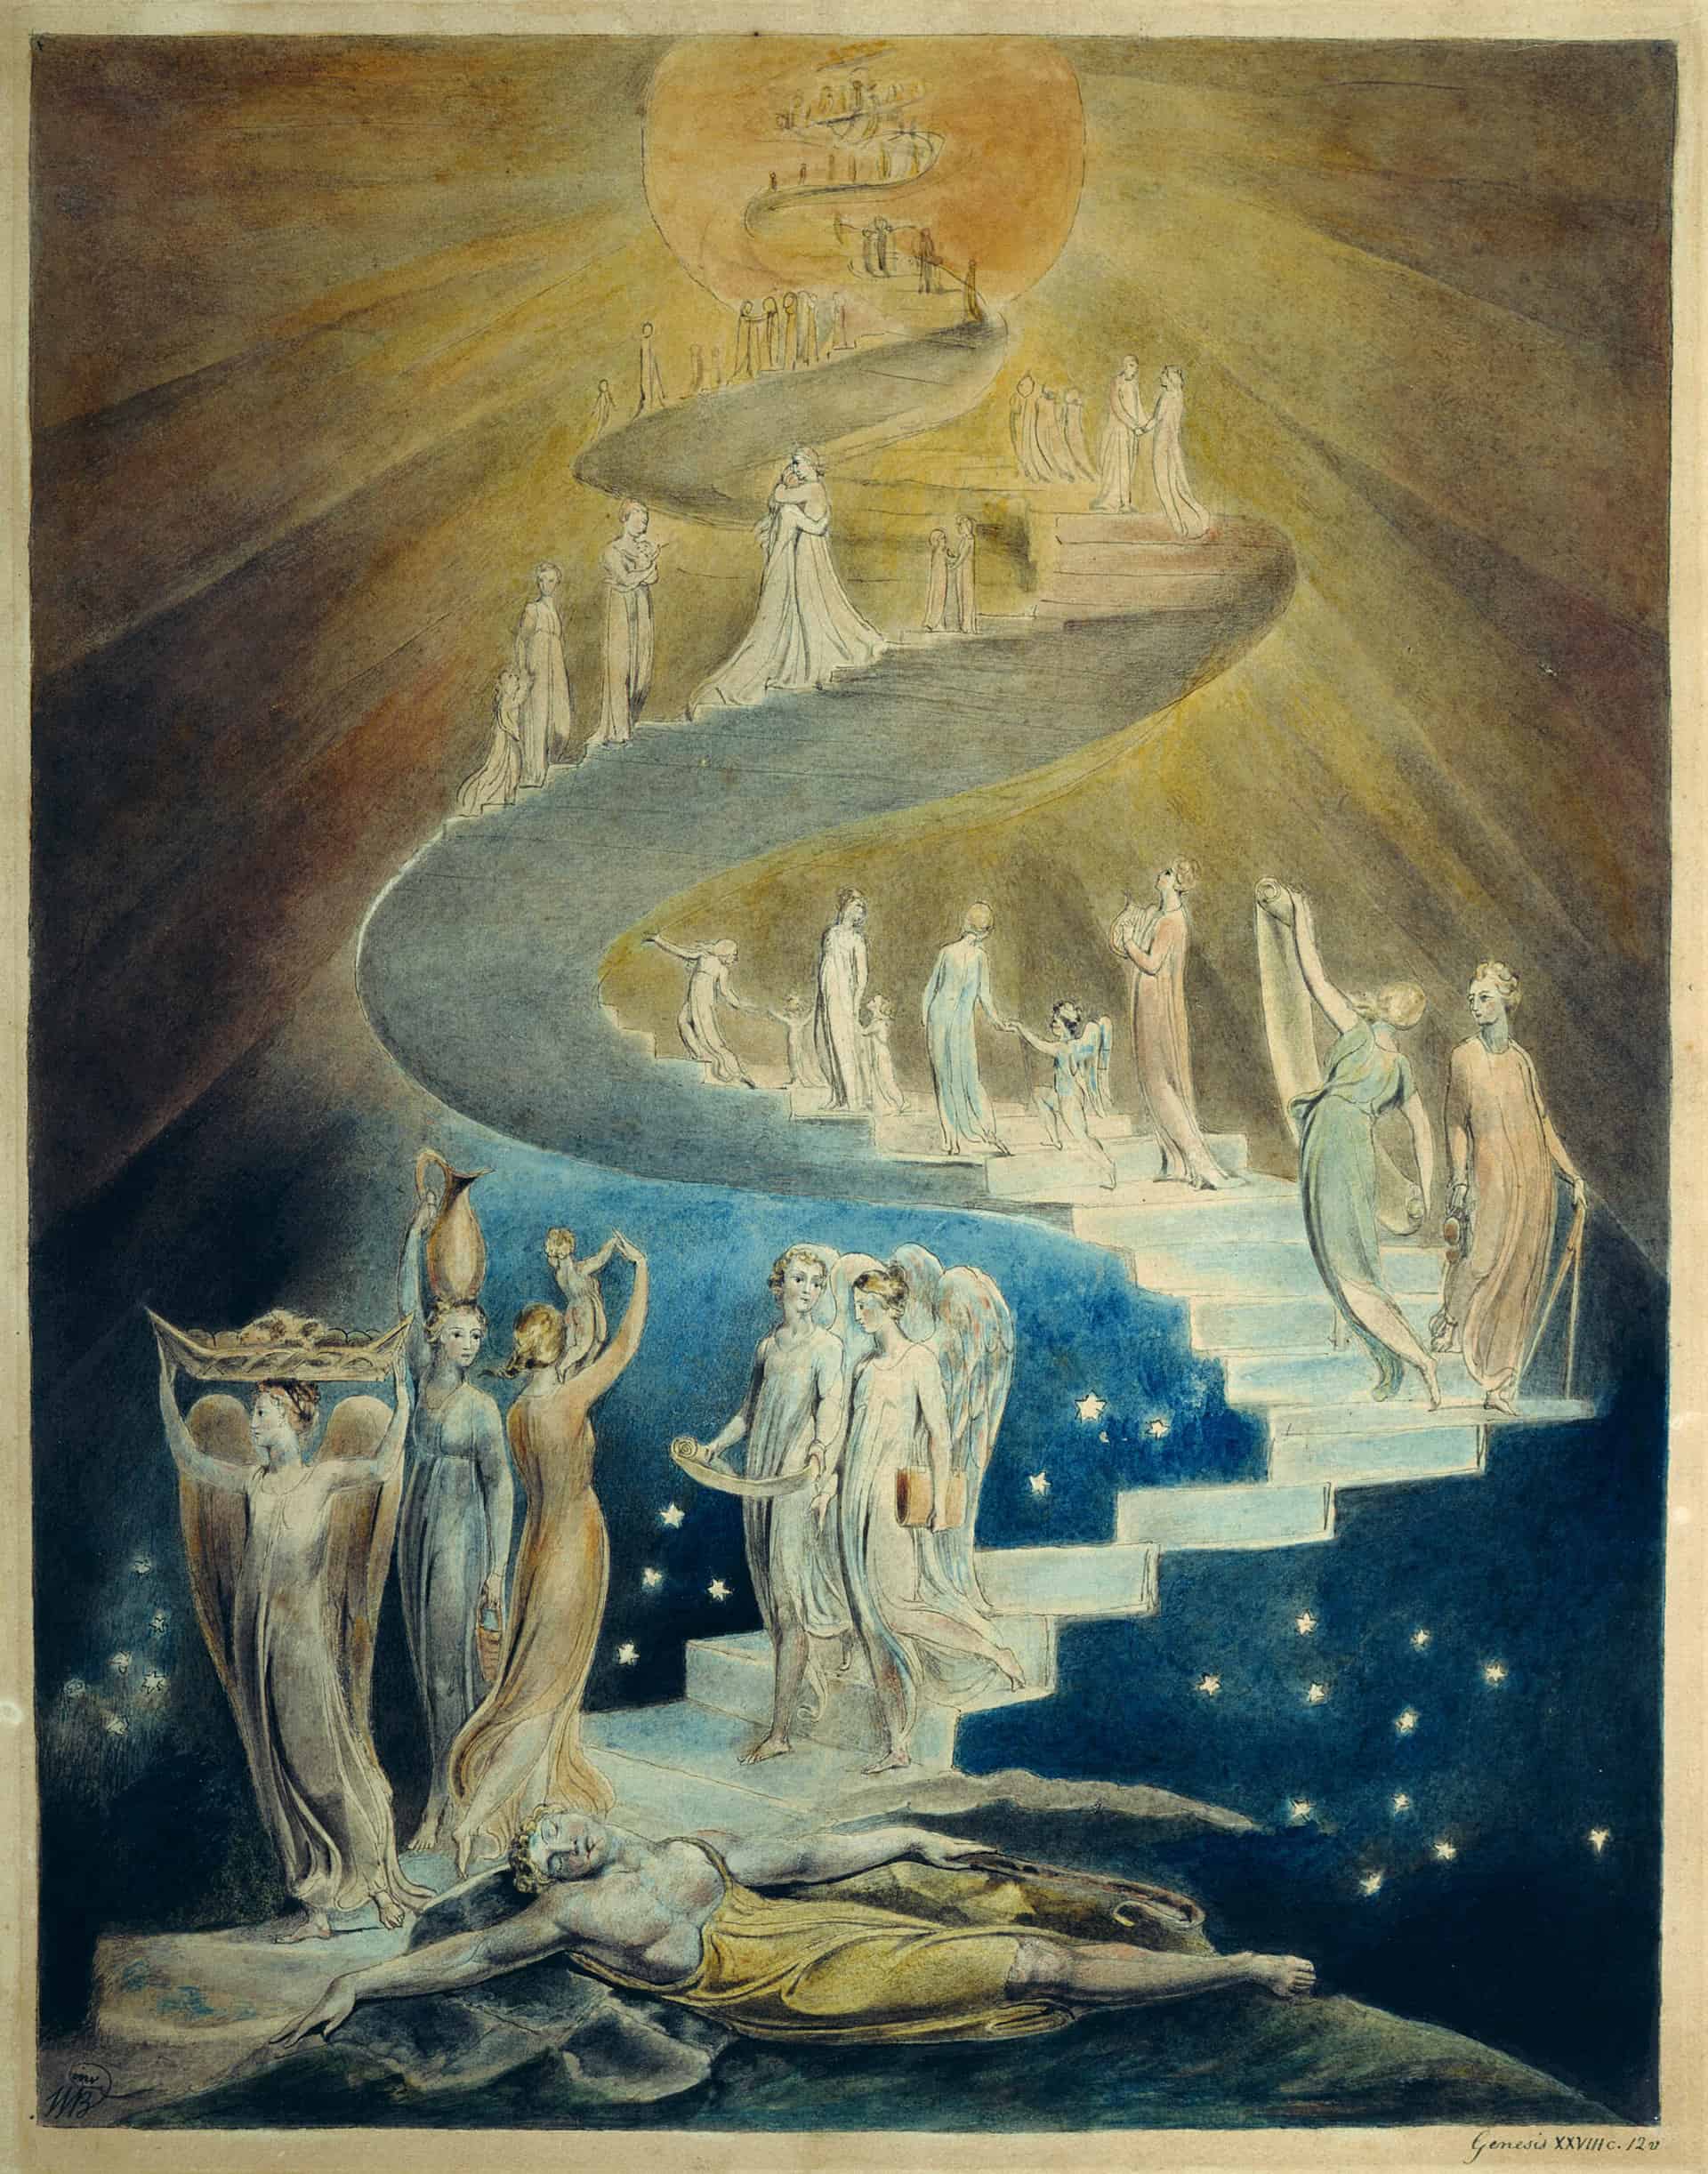 Jaccobs ladder, painting by William Blake